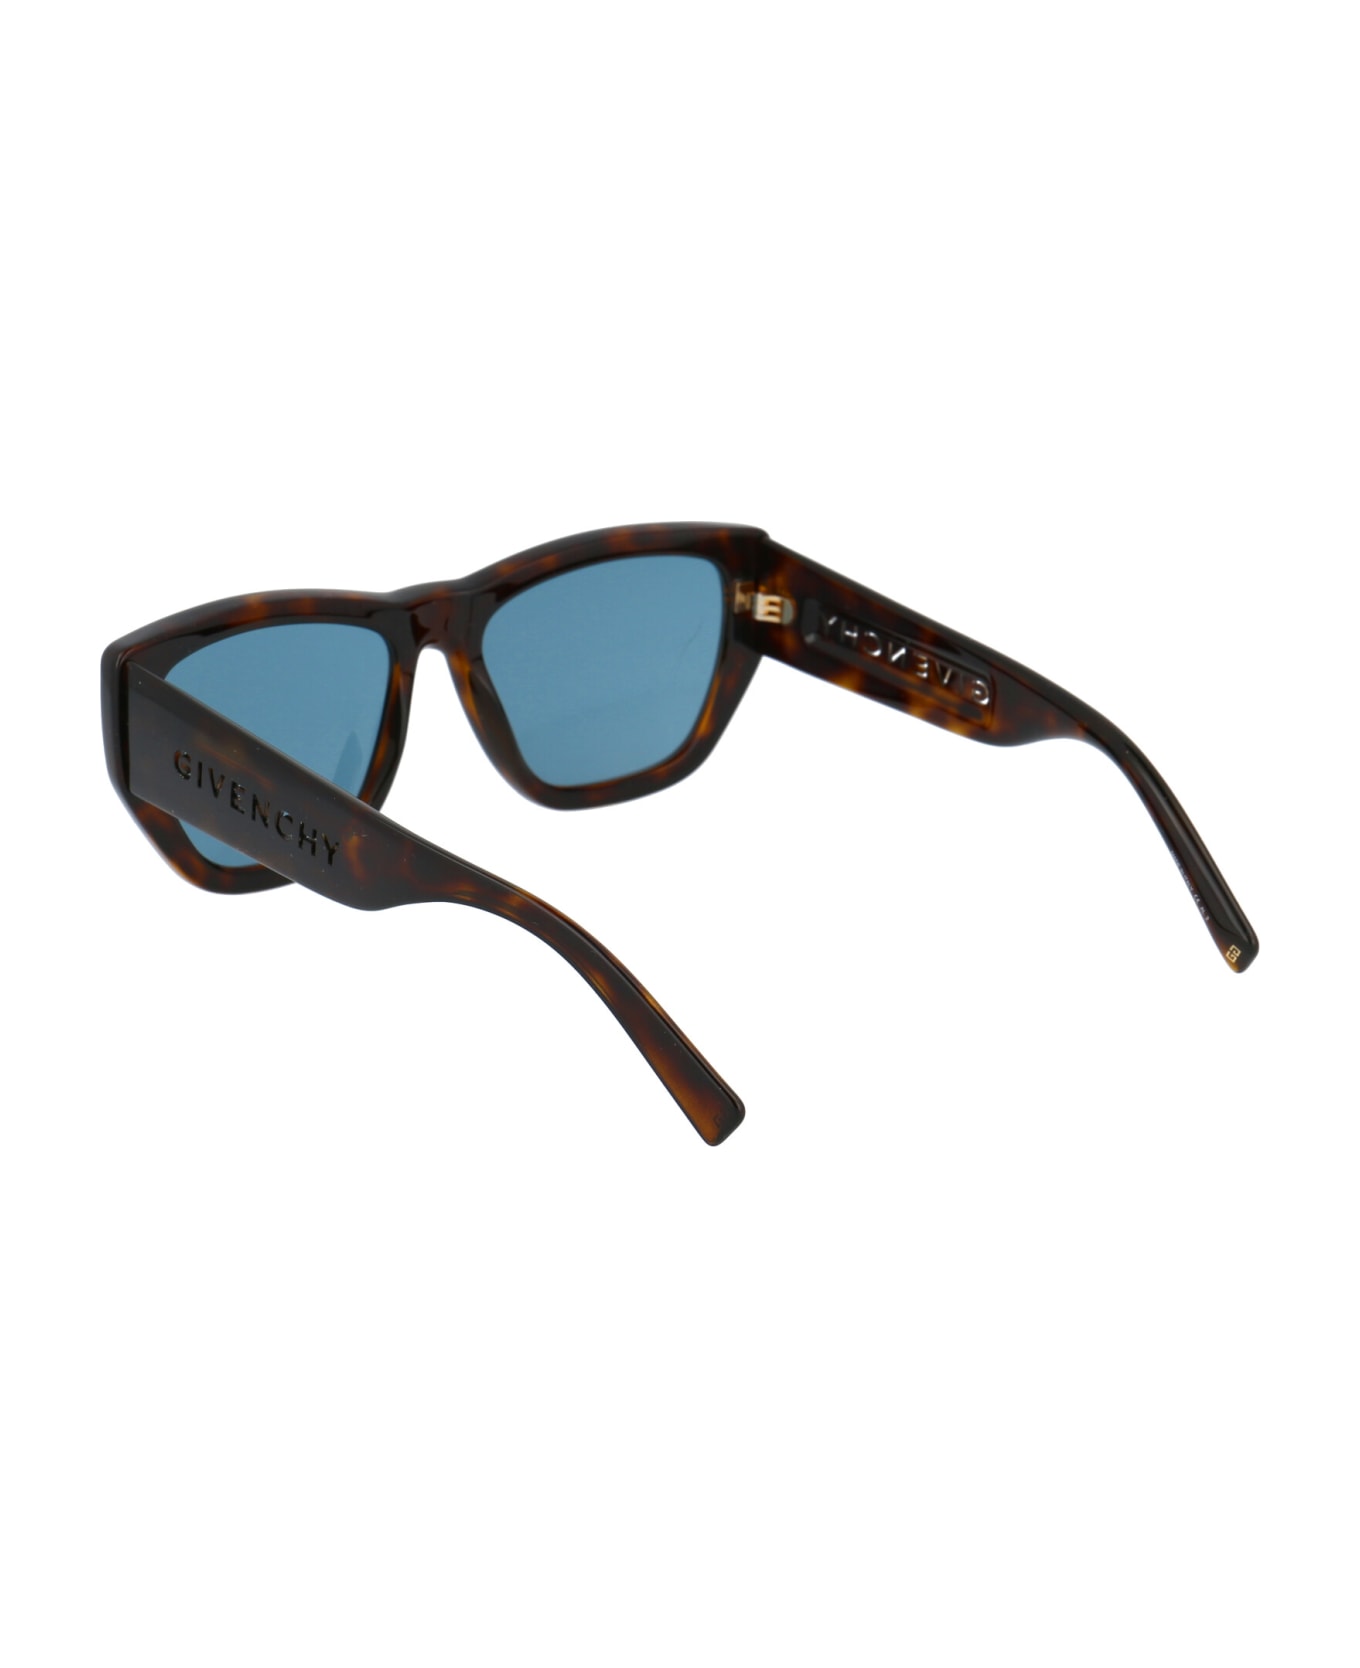 Givenchy Eyewear Gv 7202/s Sunglasses - 086KU HAVANA サングラス